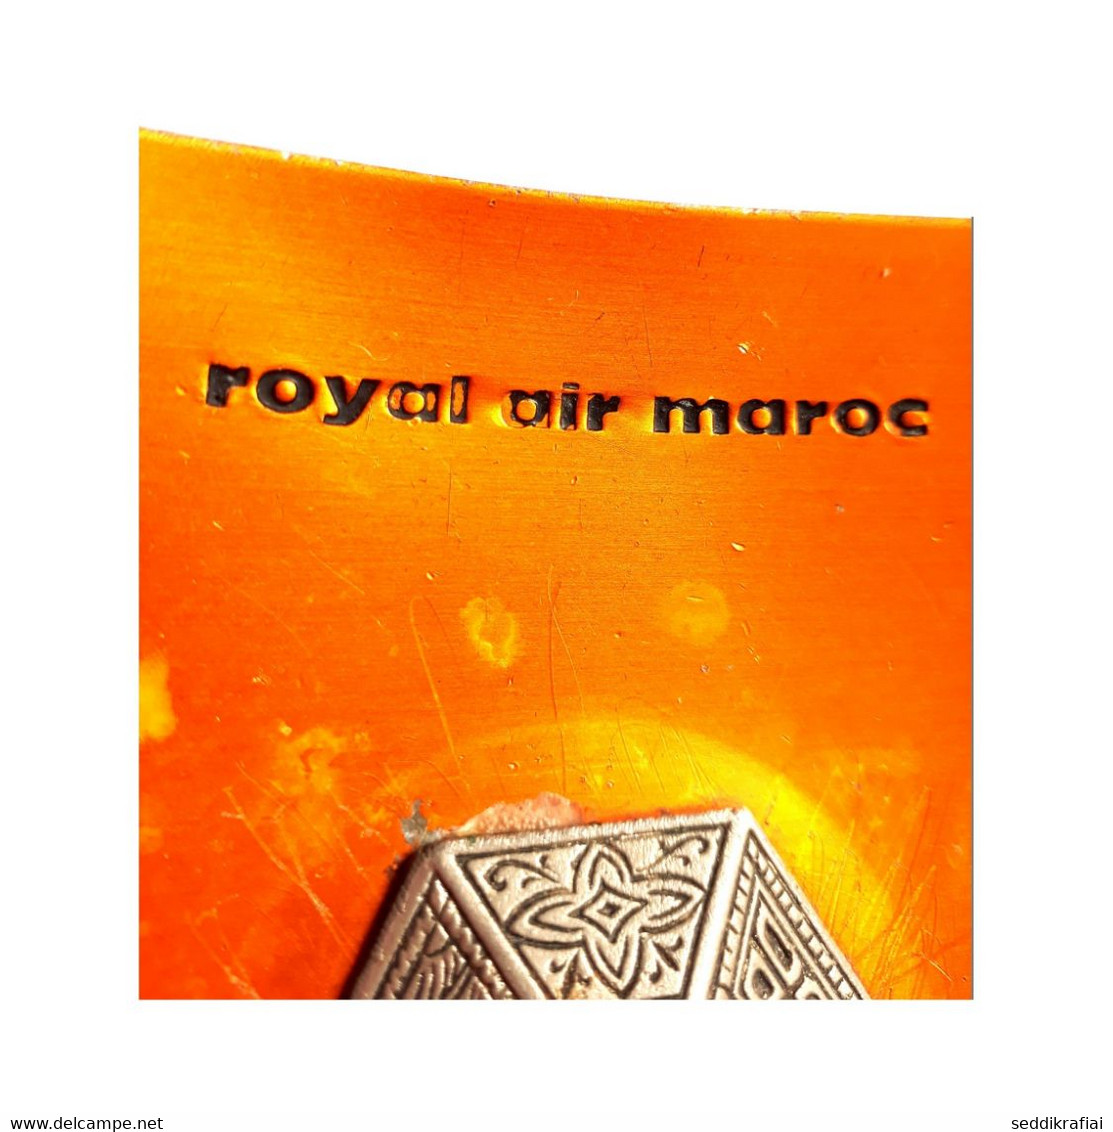 VINTAGE RAM ROYAL AIR MAROC ASHTRAY 1970s CIGARETTES GOLD COLOR COLLECTIBLE - Ashtrays